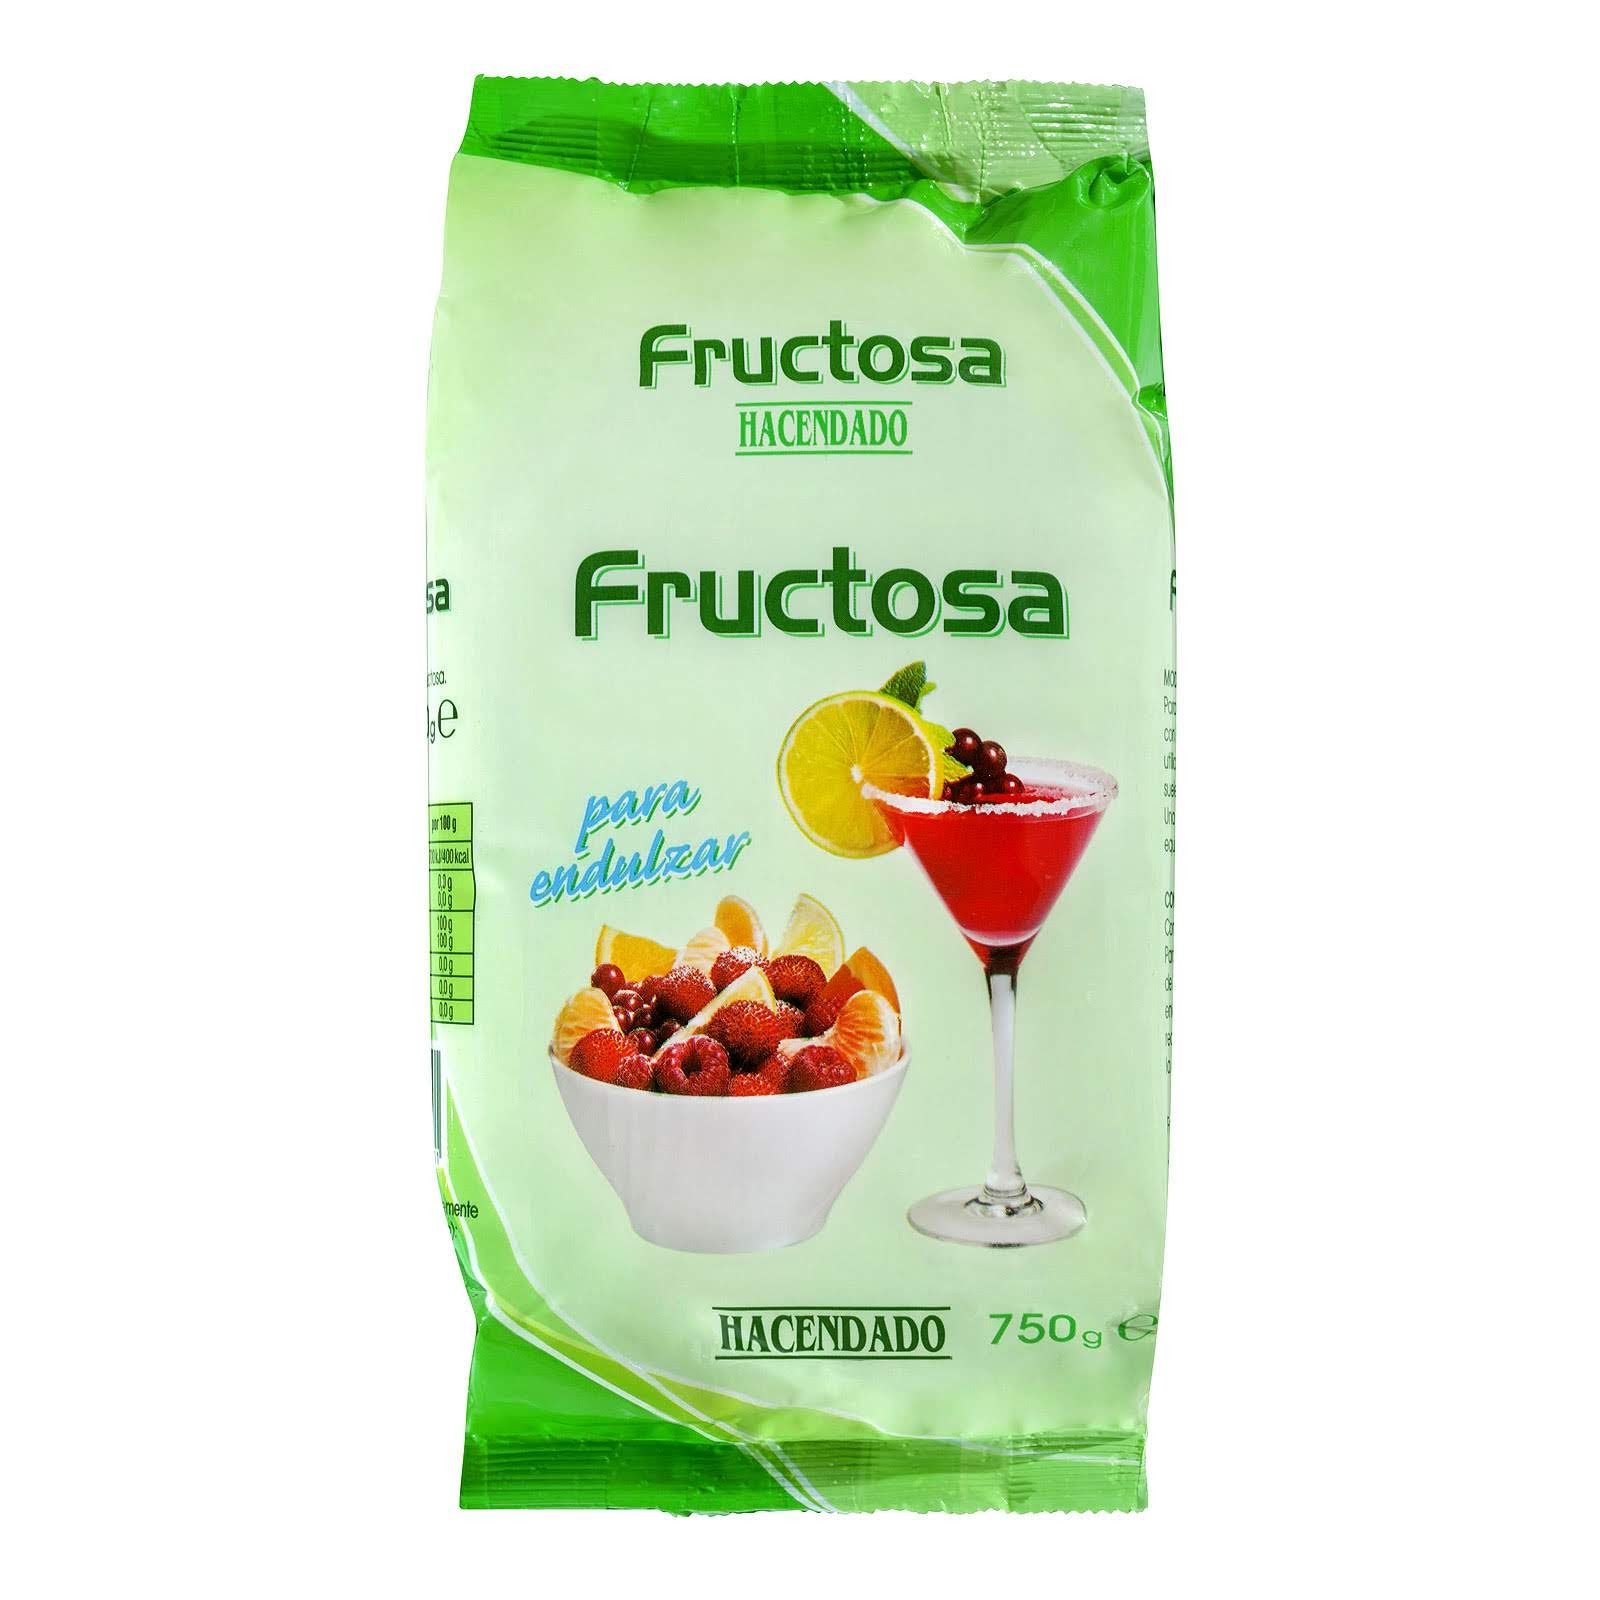 fructosa-granulada-hacendado-mercadona-1-1125165